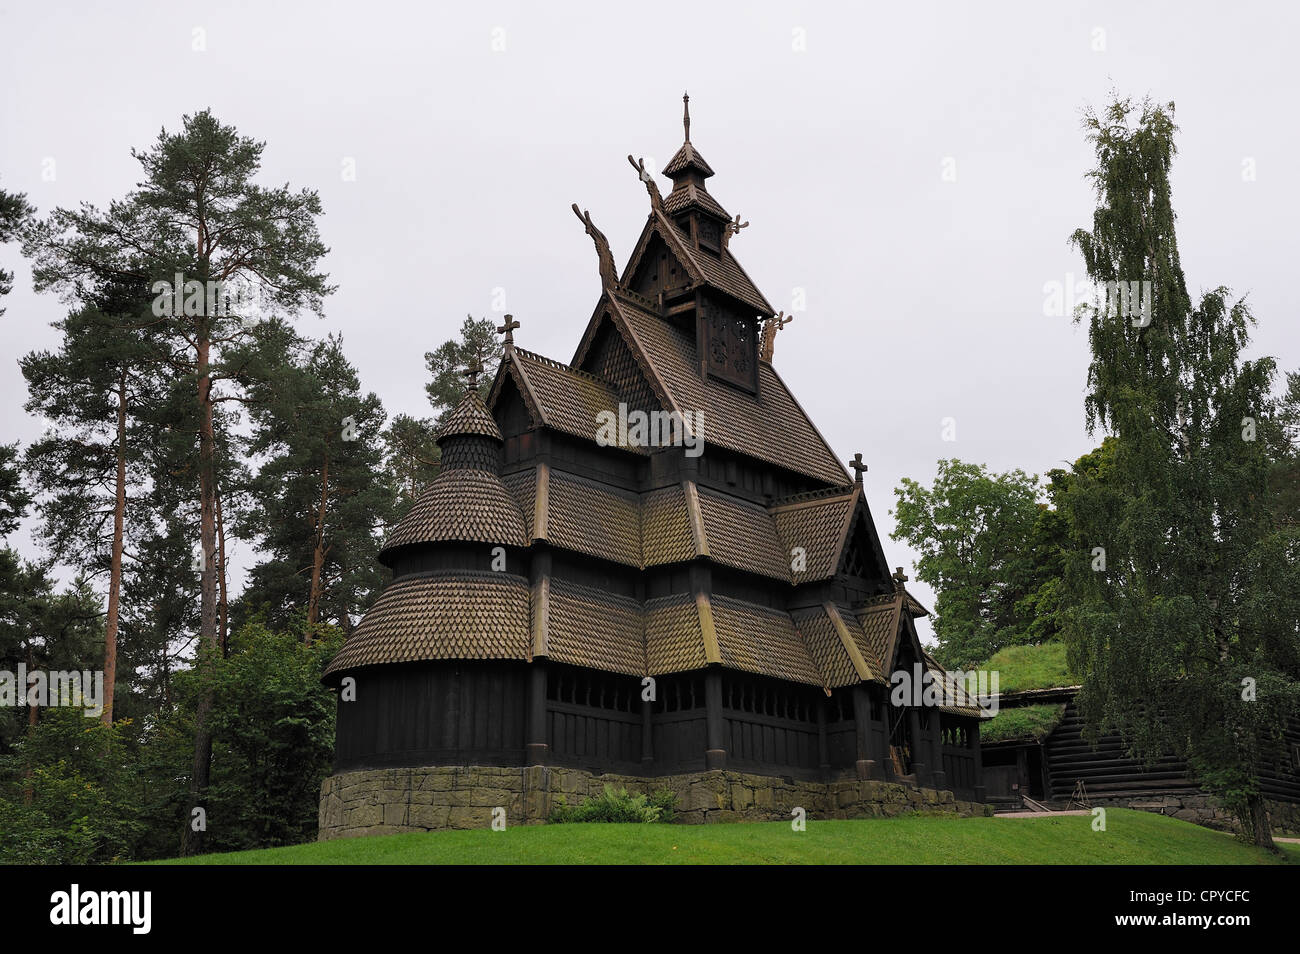 Norway, Oslo, Bygdoy Peninsula, Norsk Folkemuseum (Norwegian Folk Museum), Gol stave wooden church Stock Photo